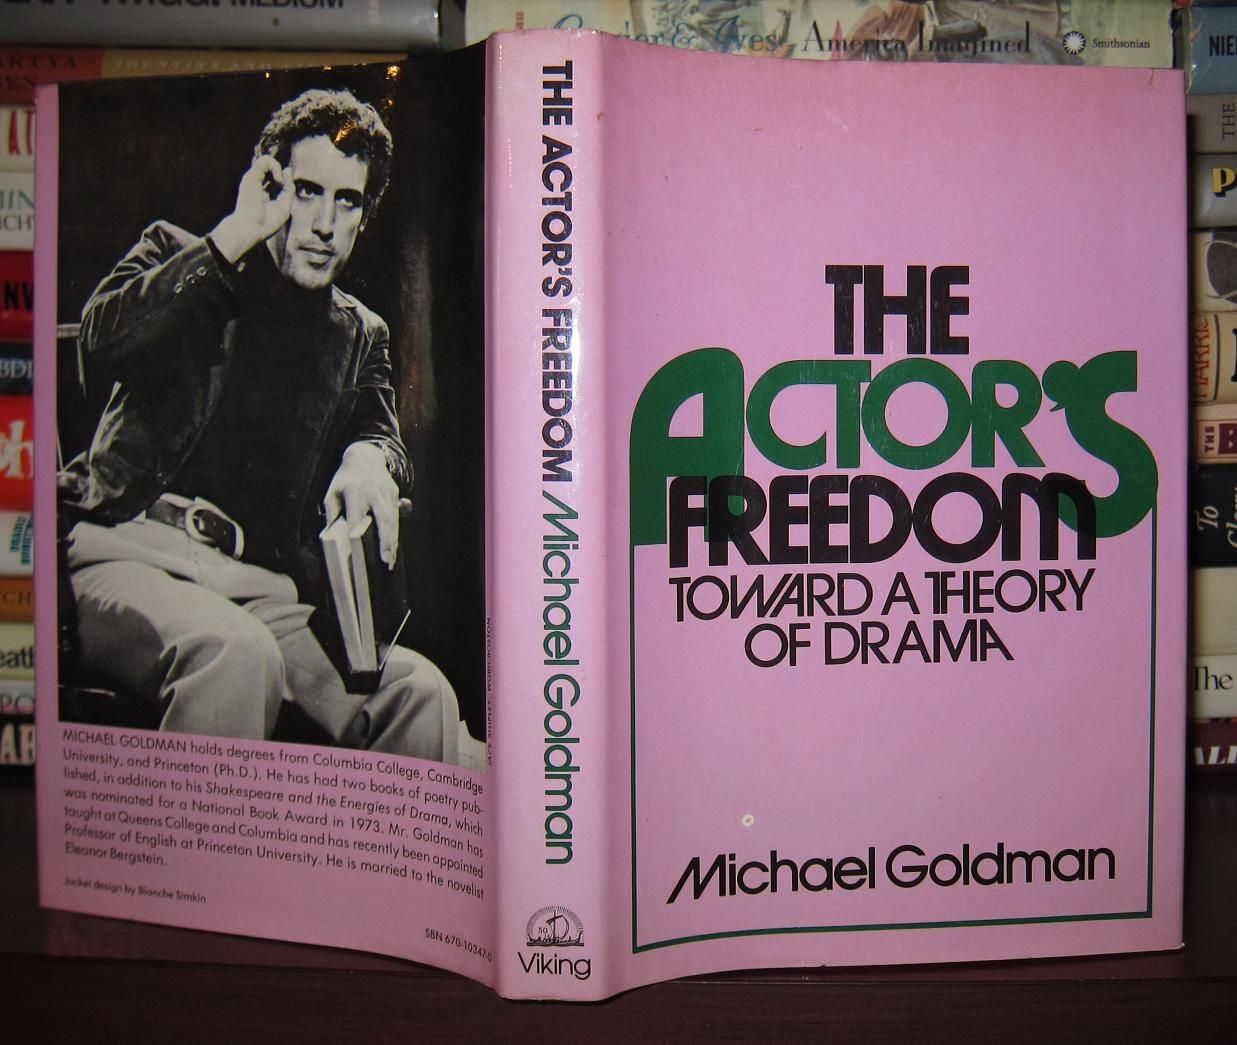 GOLDMAN, MICHAEL - Actor's Freedom Toward a Theory of Drama